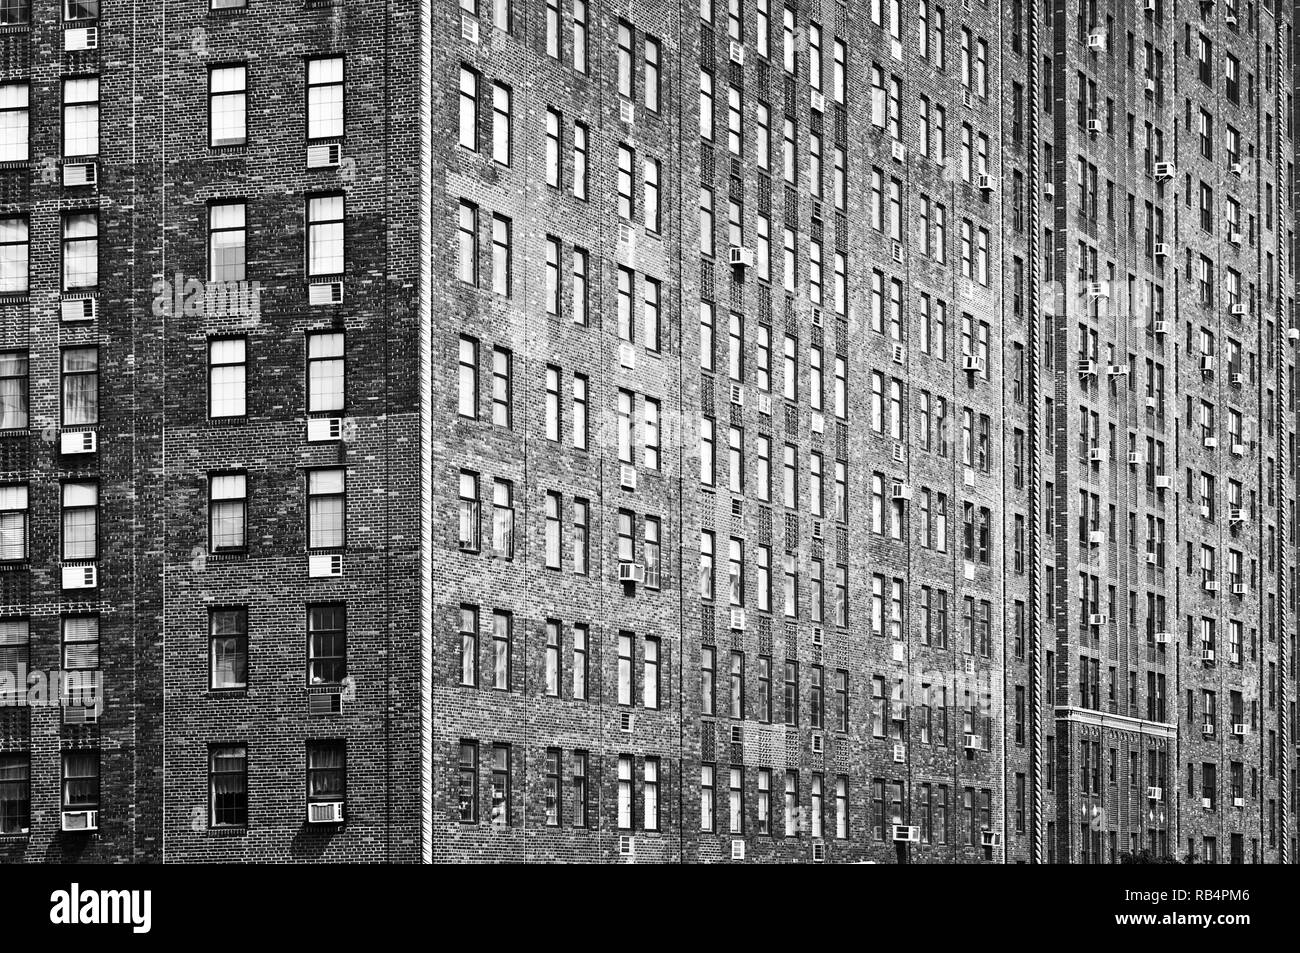 Old bricks building facade, Manhattan, New York City, USA Stock Photo